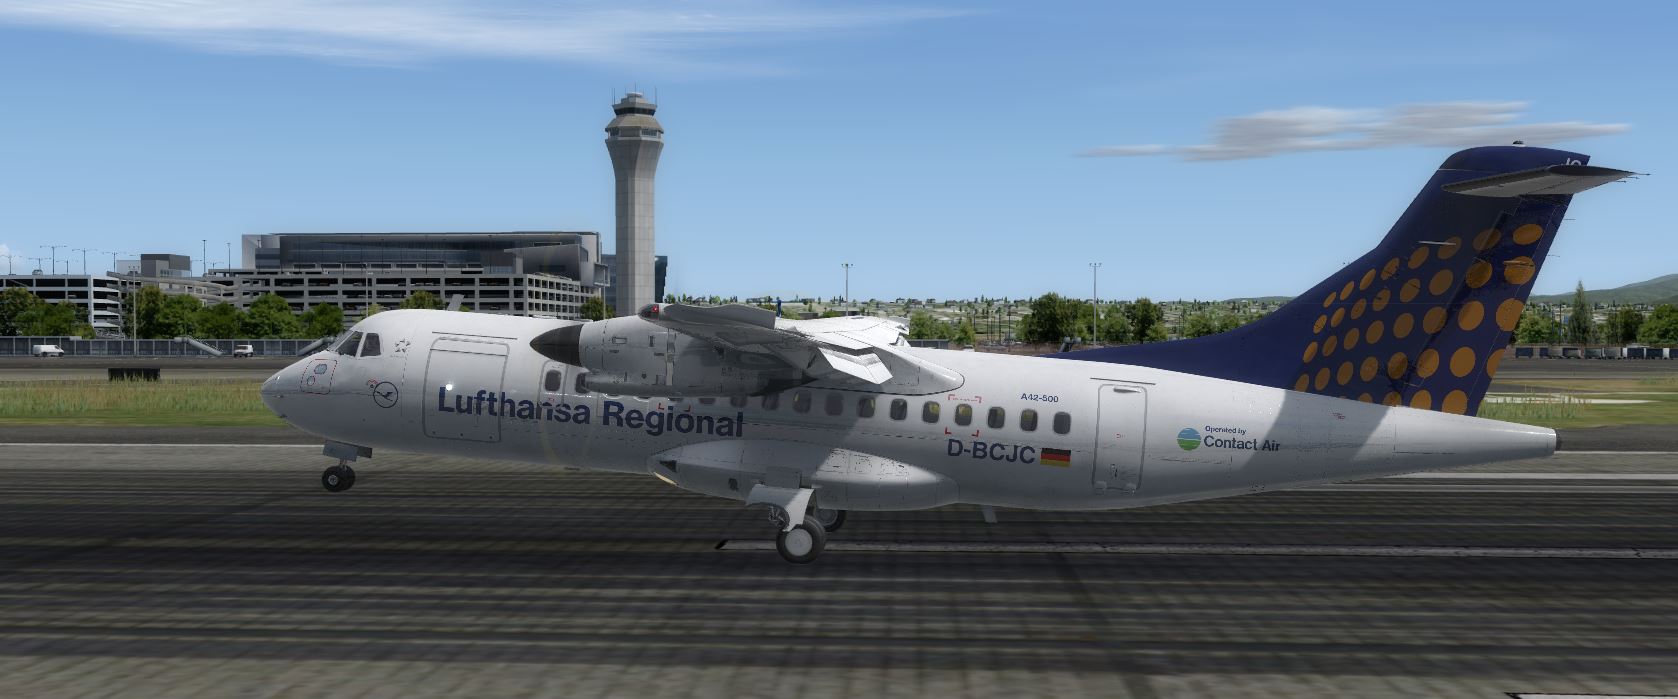 ATR42-500 Lufthansa-5289 